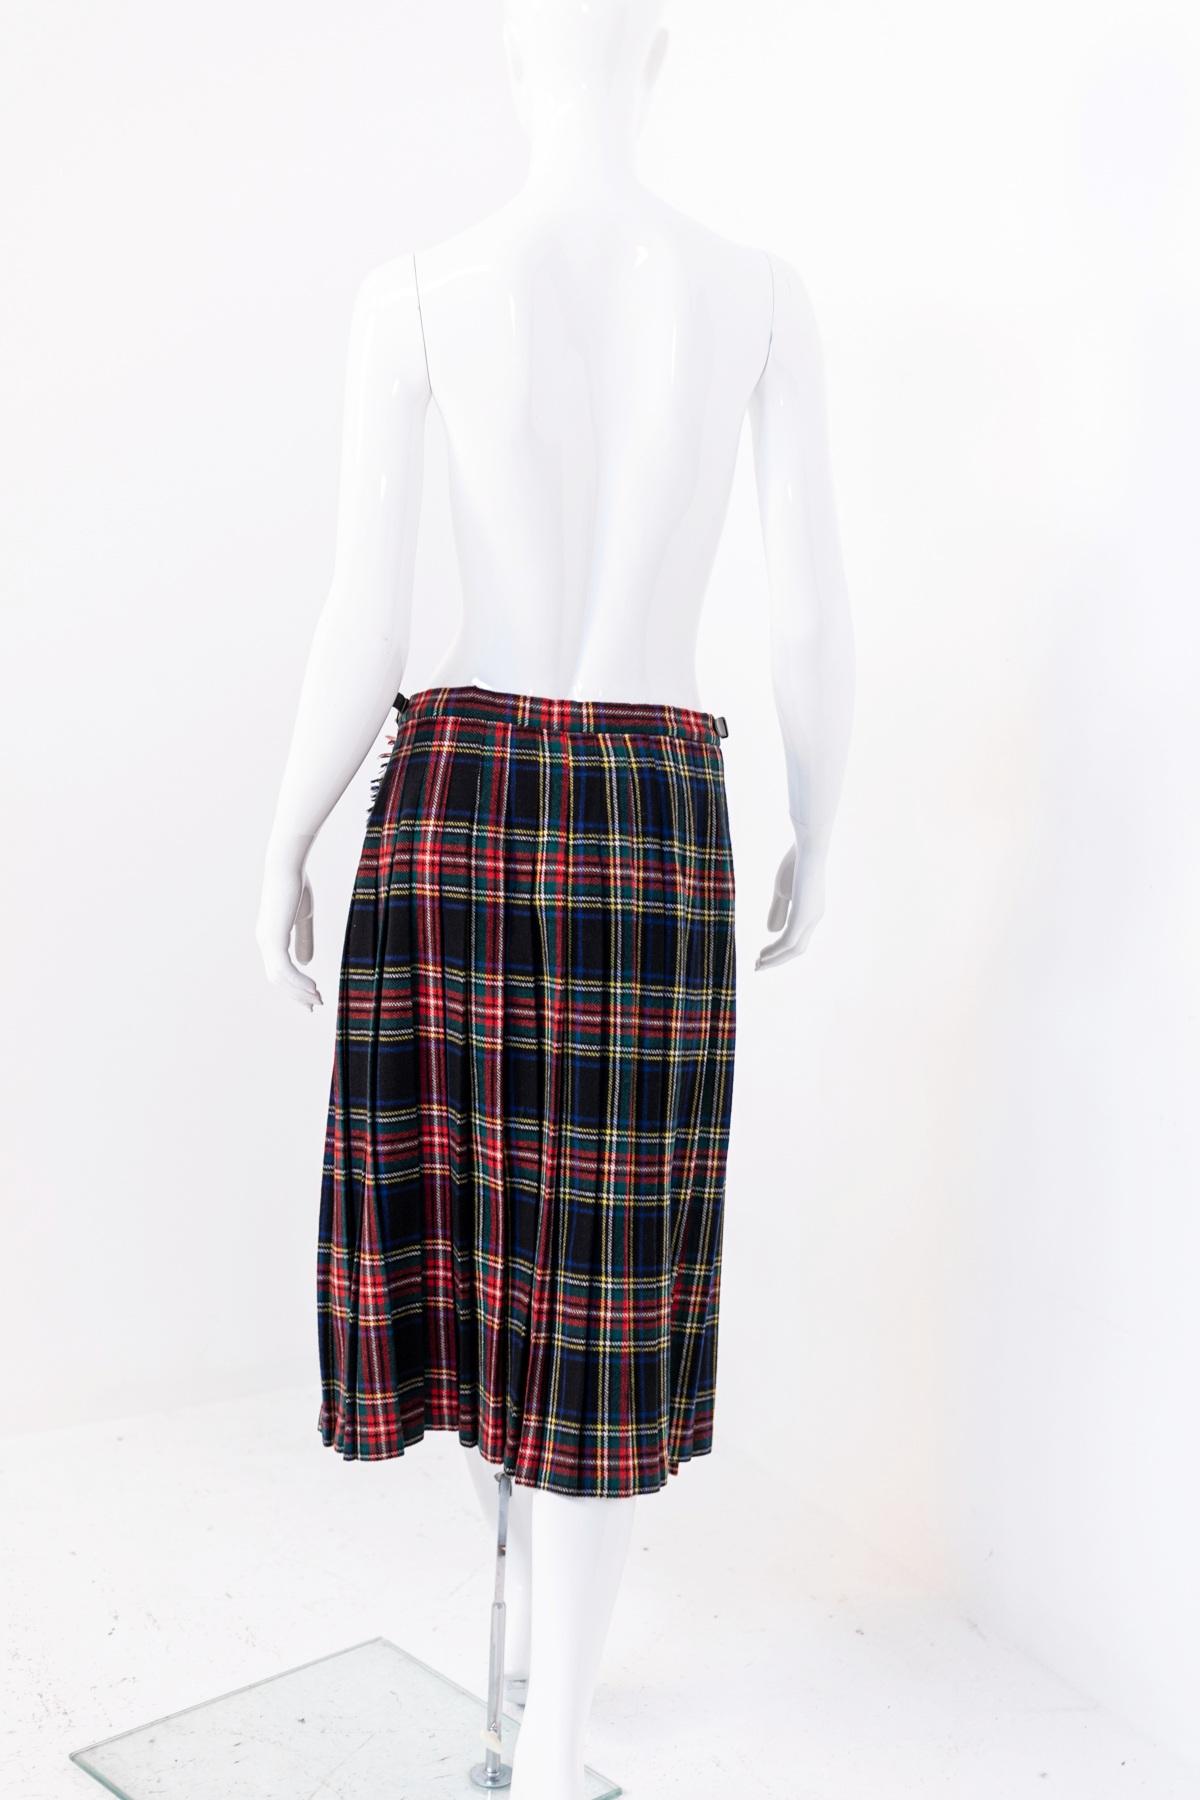 Clan Laird Vintage Scottish Skirt For Sale 5